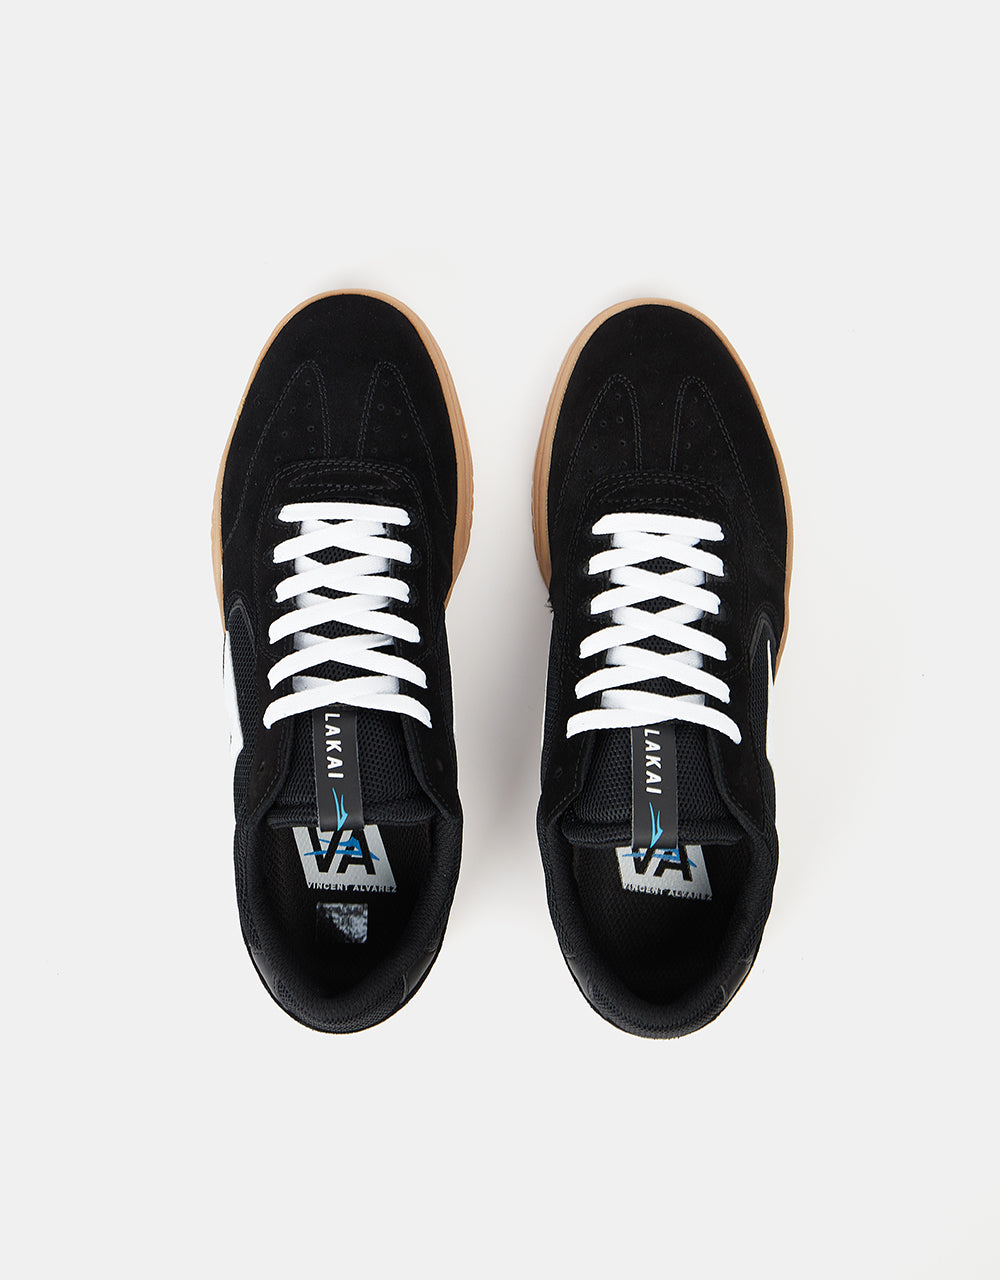 Lakai Atlantic Skate Shoes - Black/Gum Suede